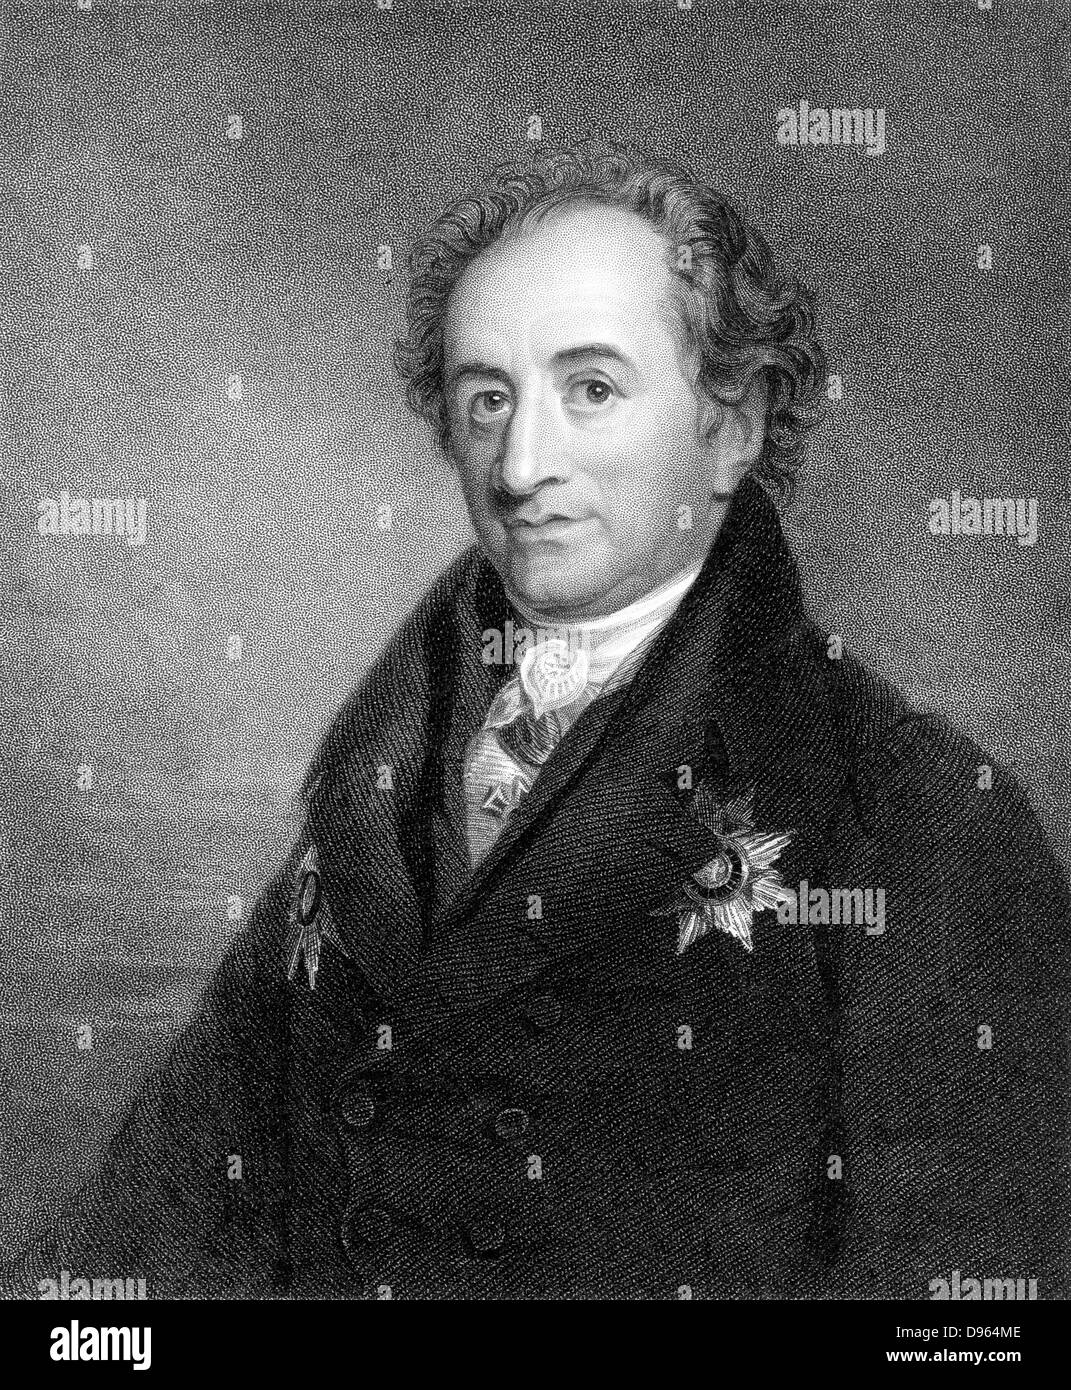 Johann Wolfgang von Goethe (Francoforte sul Meno 1749 - Weimar 1832) poeta tedesco, drammaturgo e scienziato. Incisione in acciaio c1860. Foto Stock